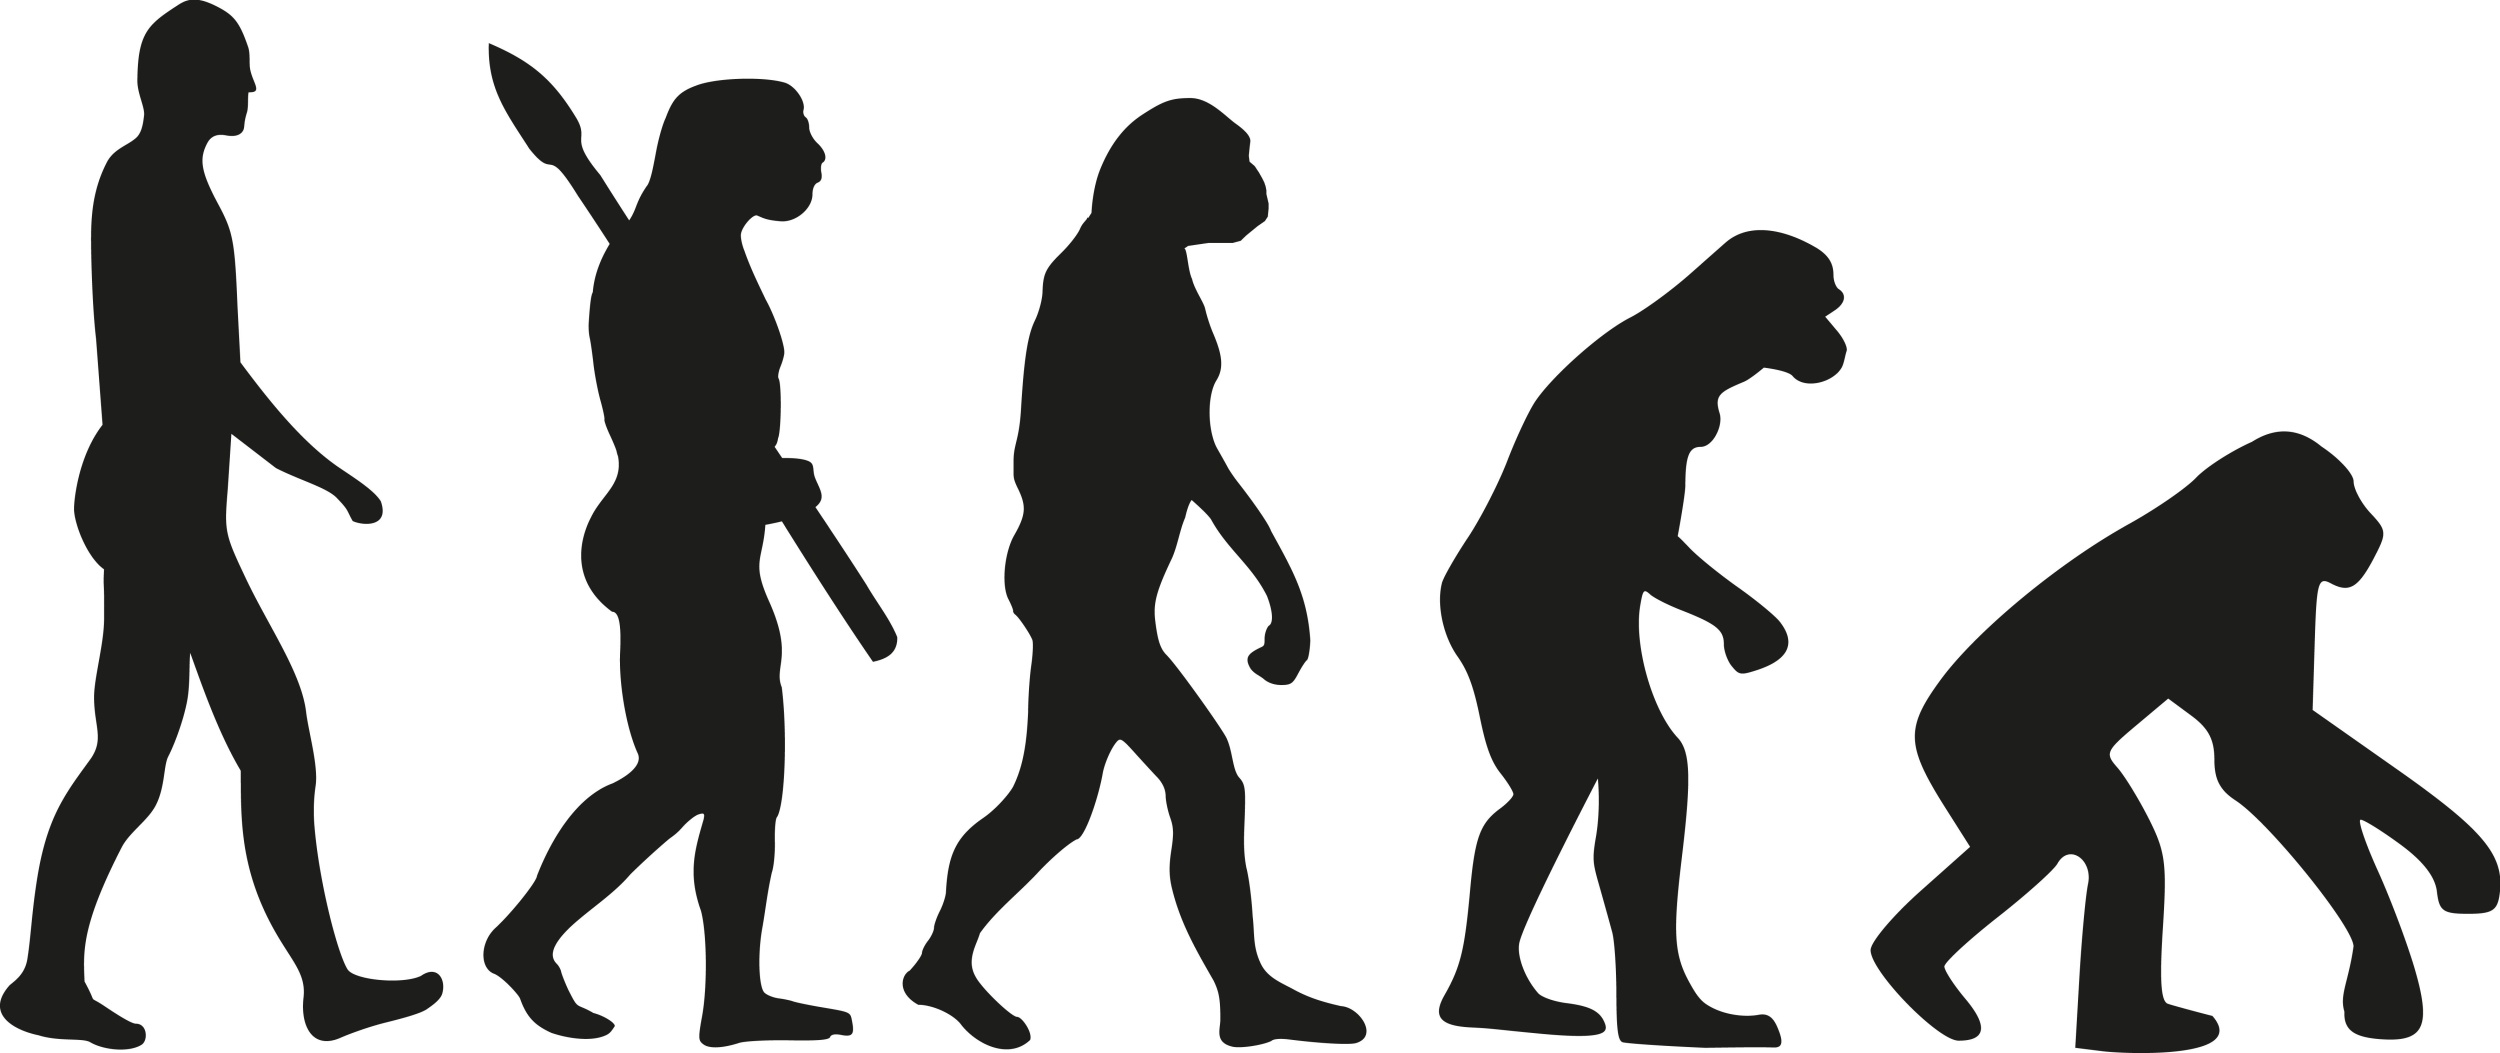 Эволюция видна. Эволюция человека. Эволюция обезьяны в человека. Человек превращается в обезьяну.